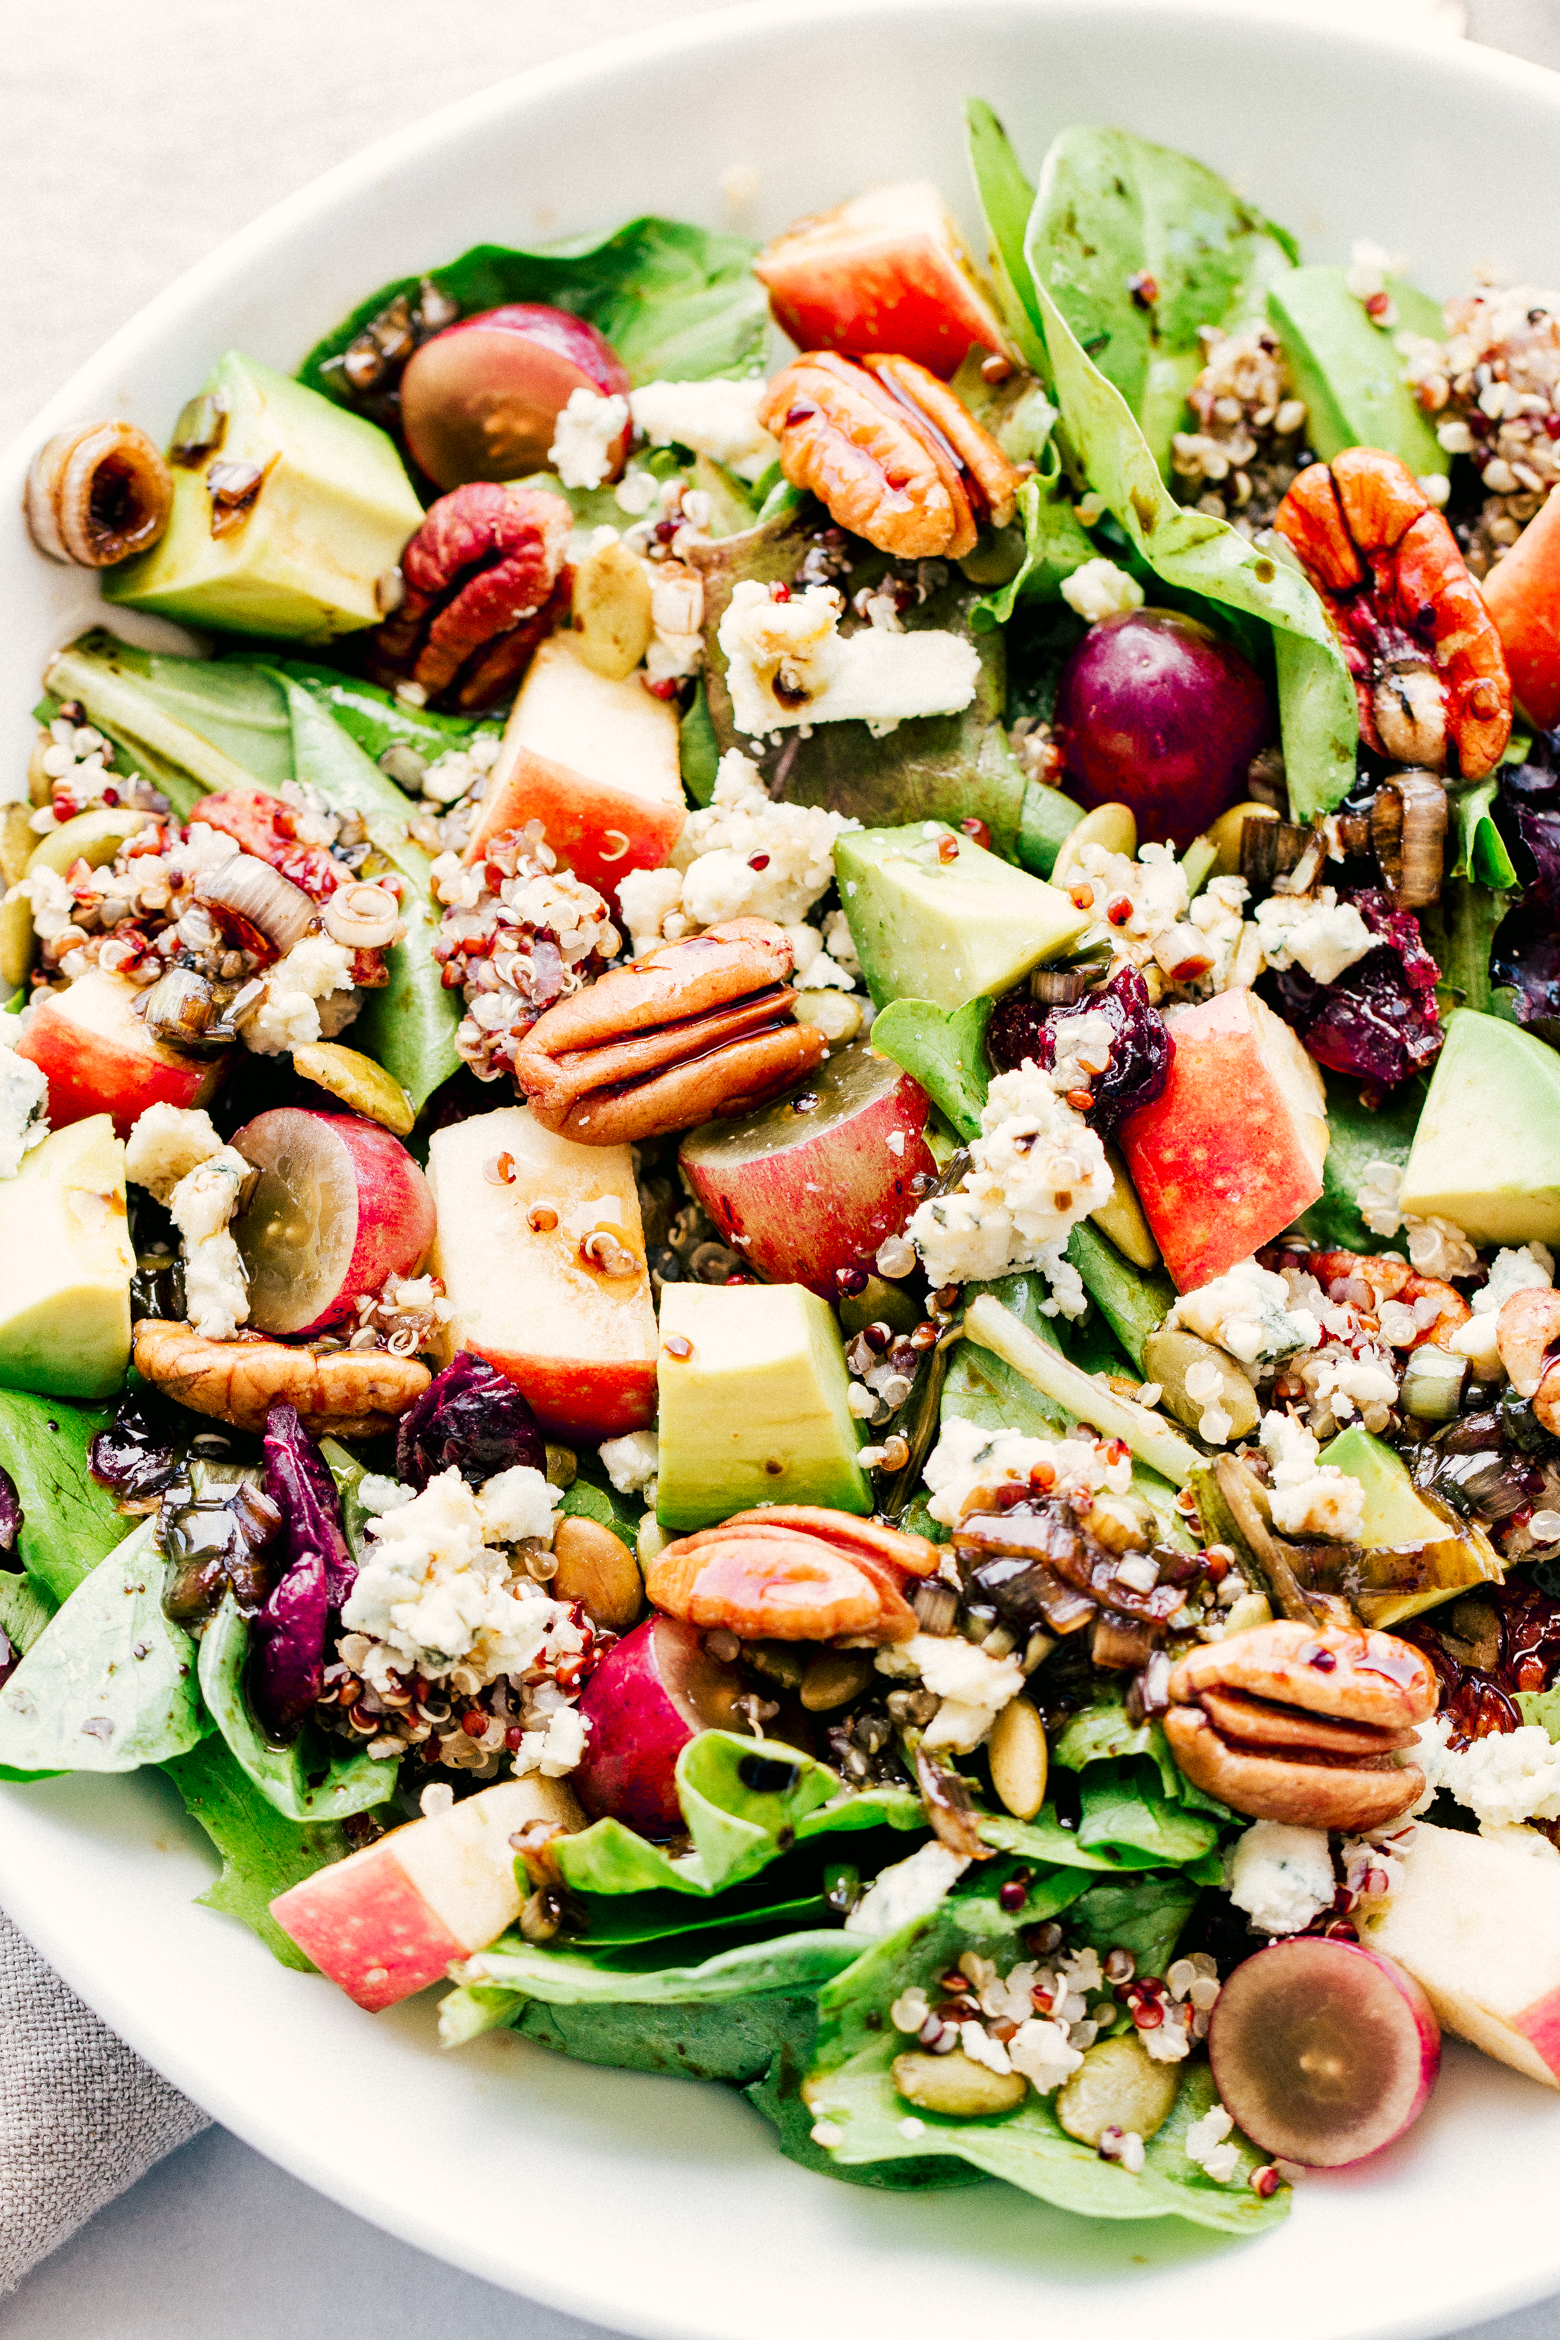 Fall Harvest Salad with Homemade Vinaigrette - The Food Cafe